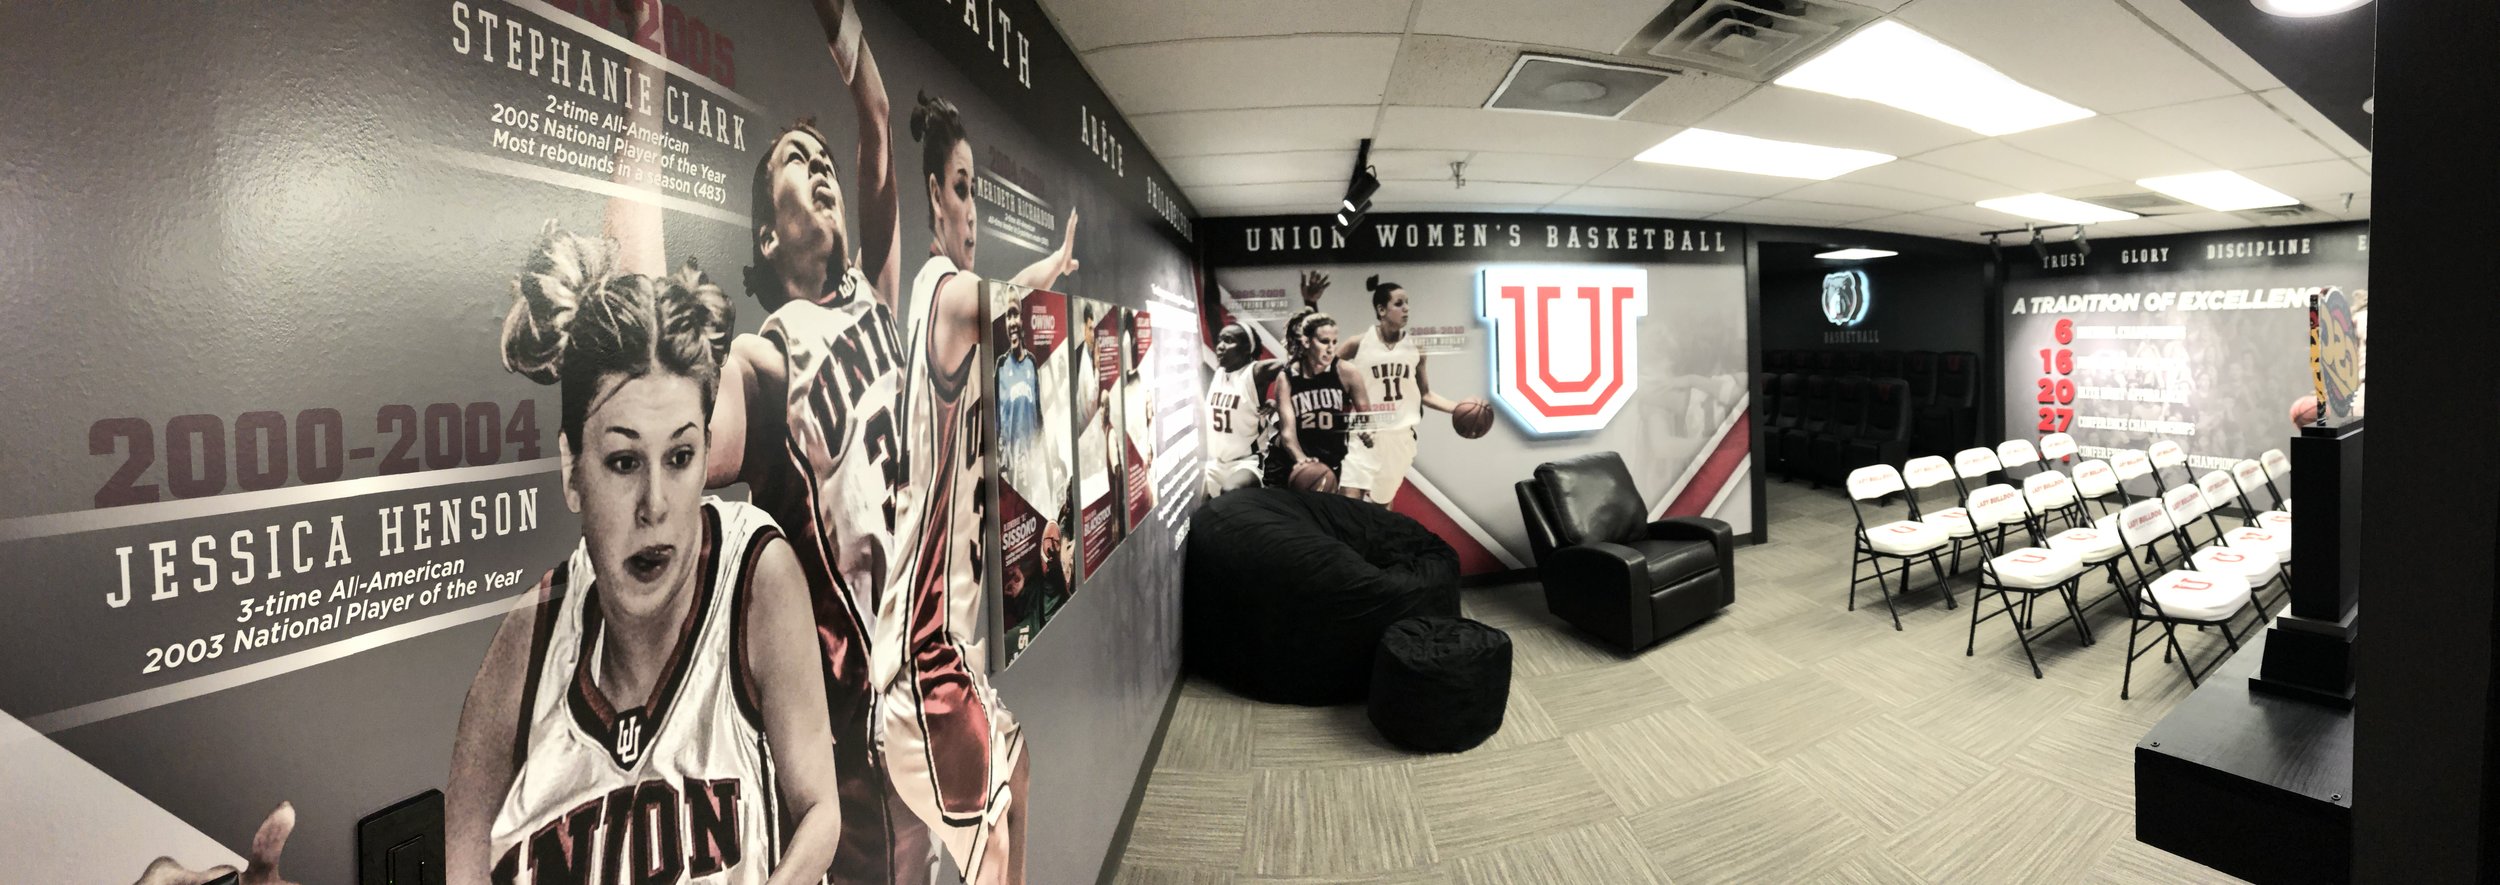 After-Union-University_Womens-Basketball-Locker-Room_Interior-Branding_LSIGraphics_Memphis-TN-15 ..